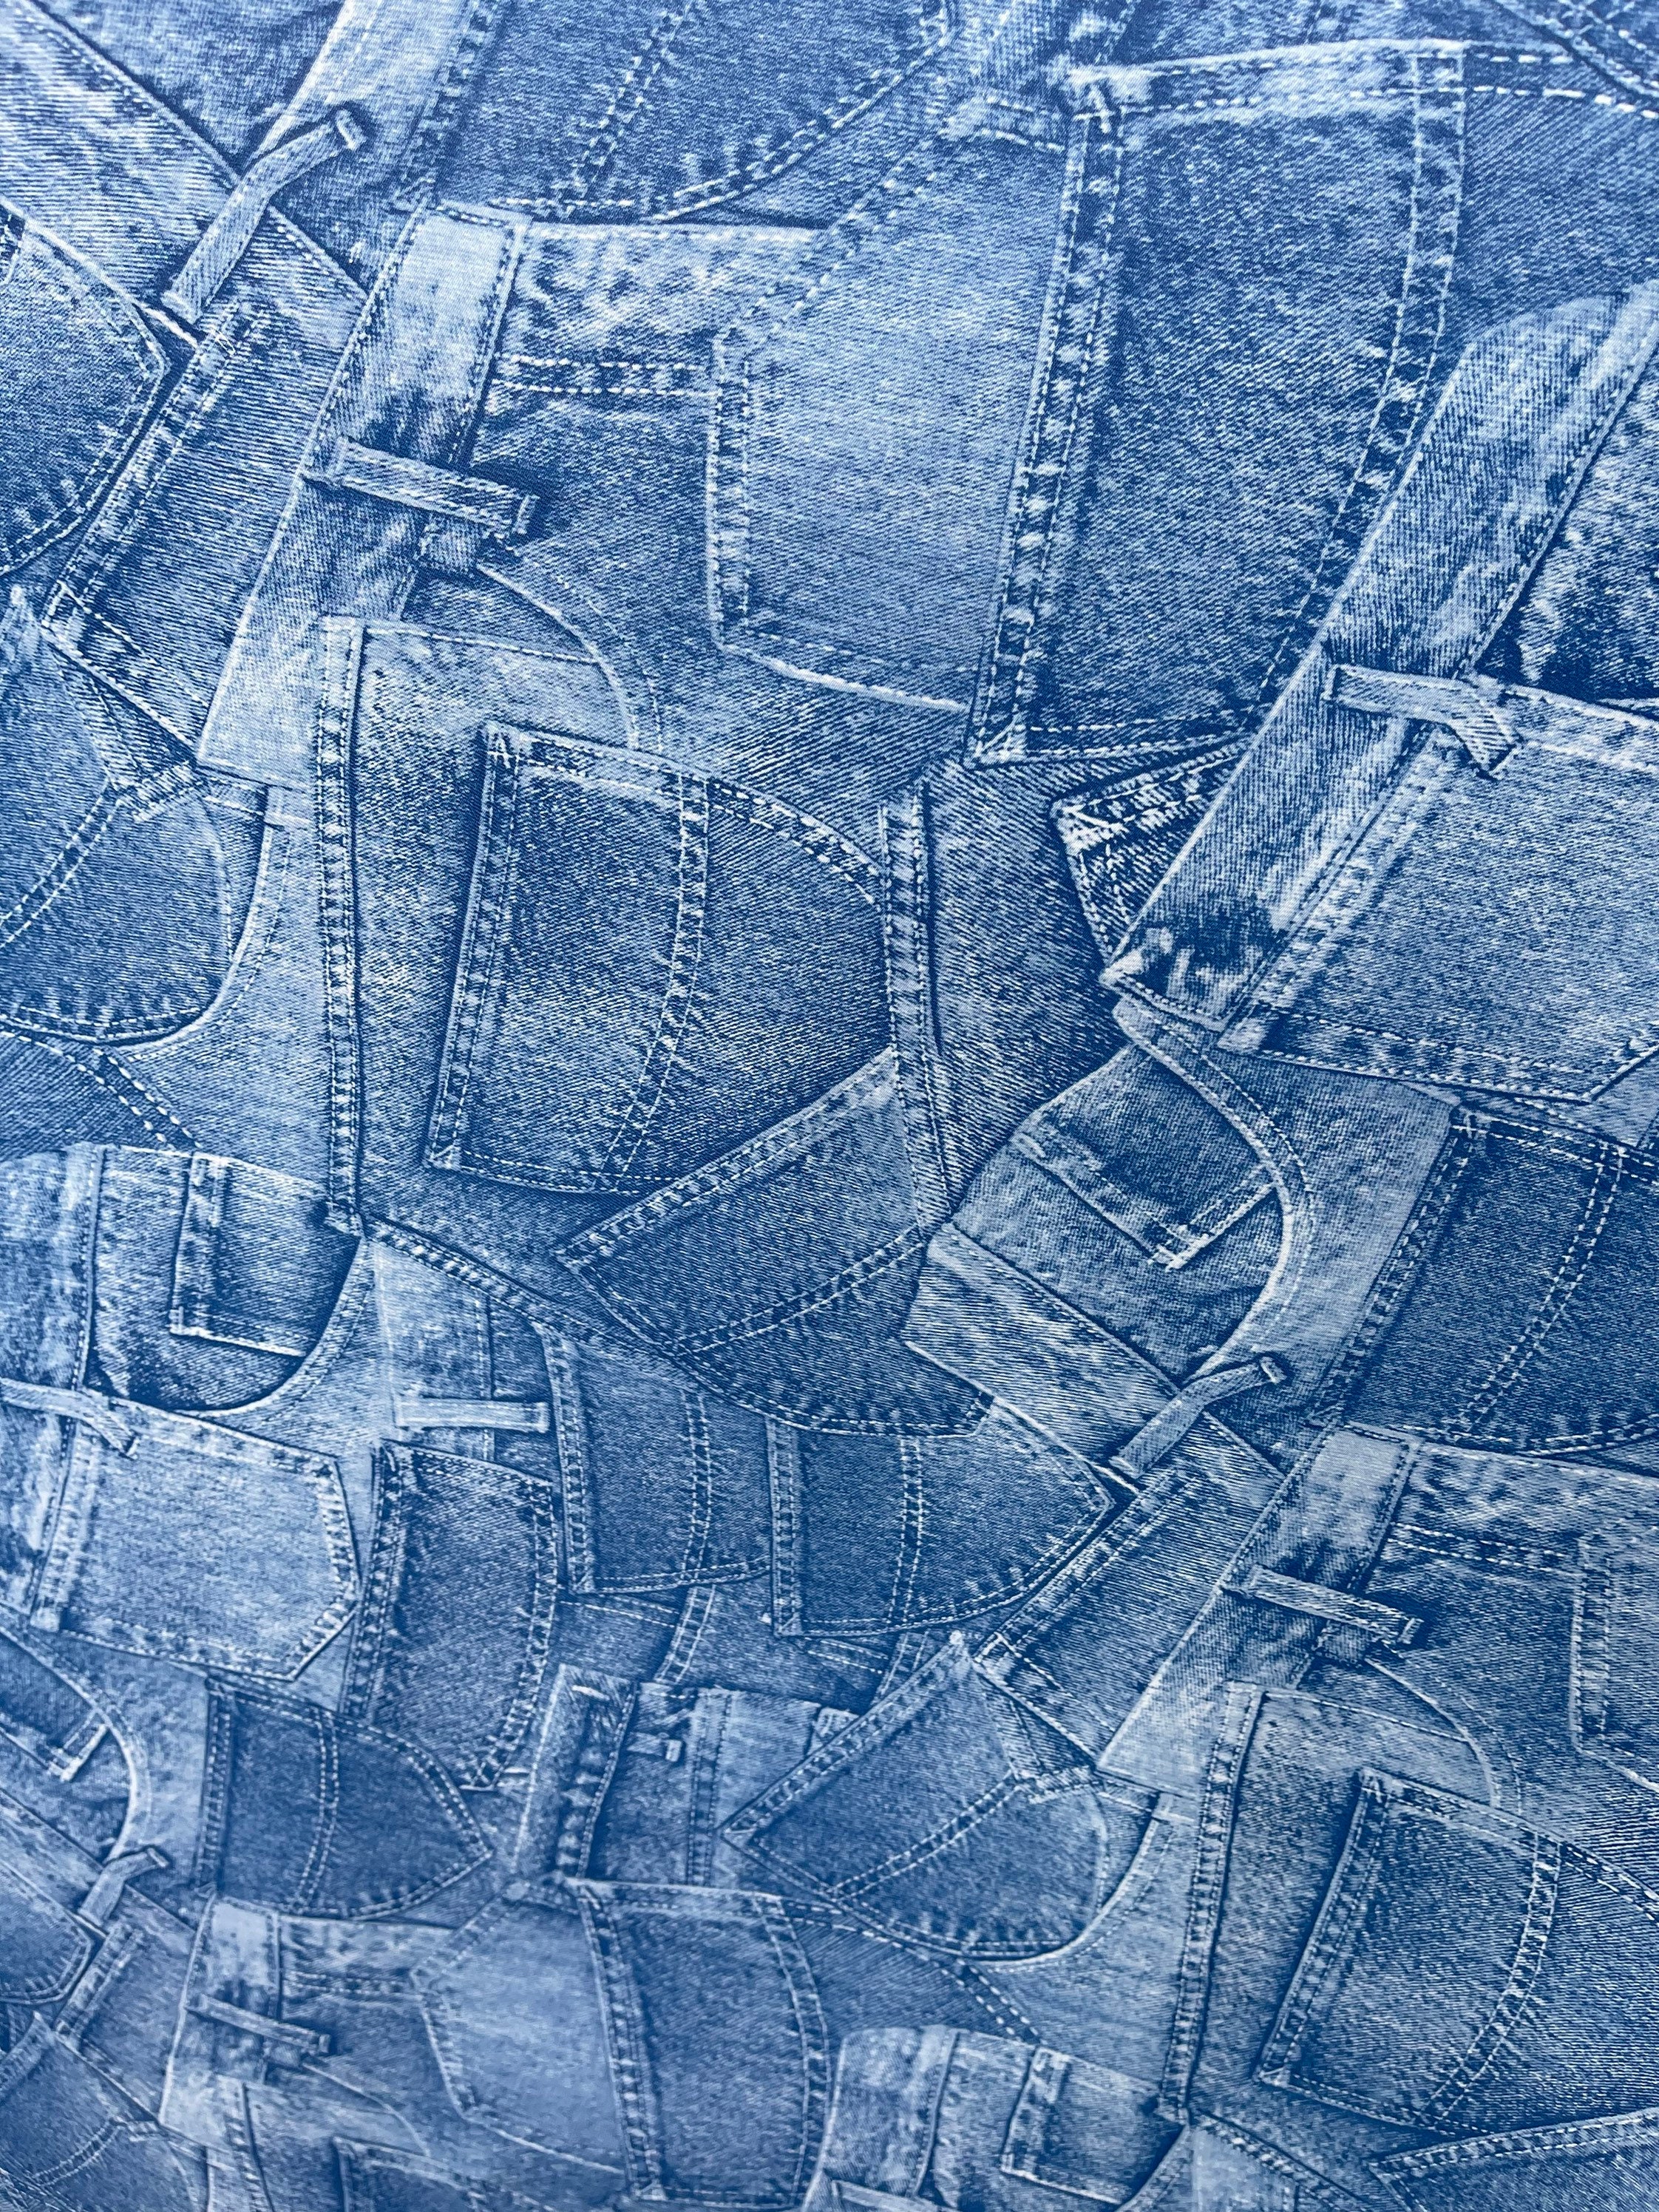 Jeans Design Denim Looking Print on Vinyl Non Stretch Heavy Weight